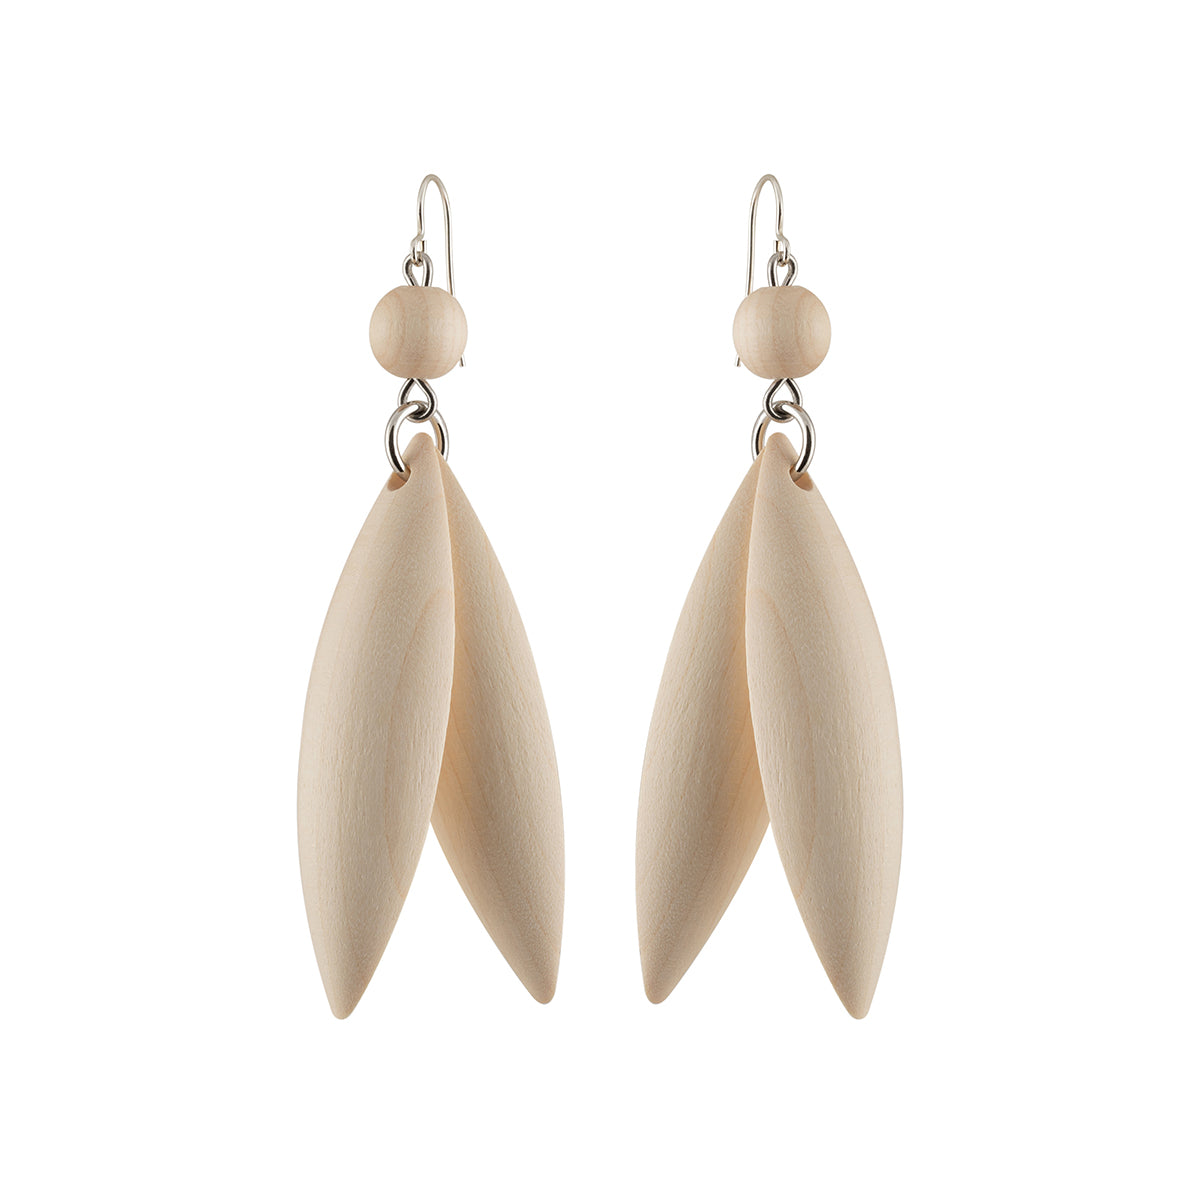 Jalava earrings, wood